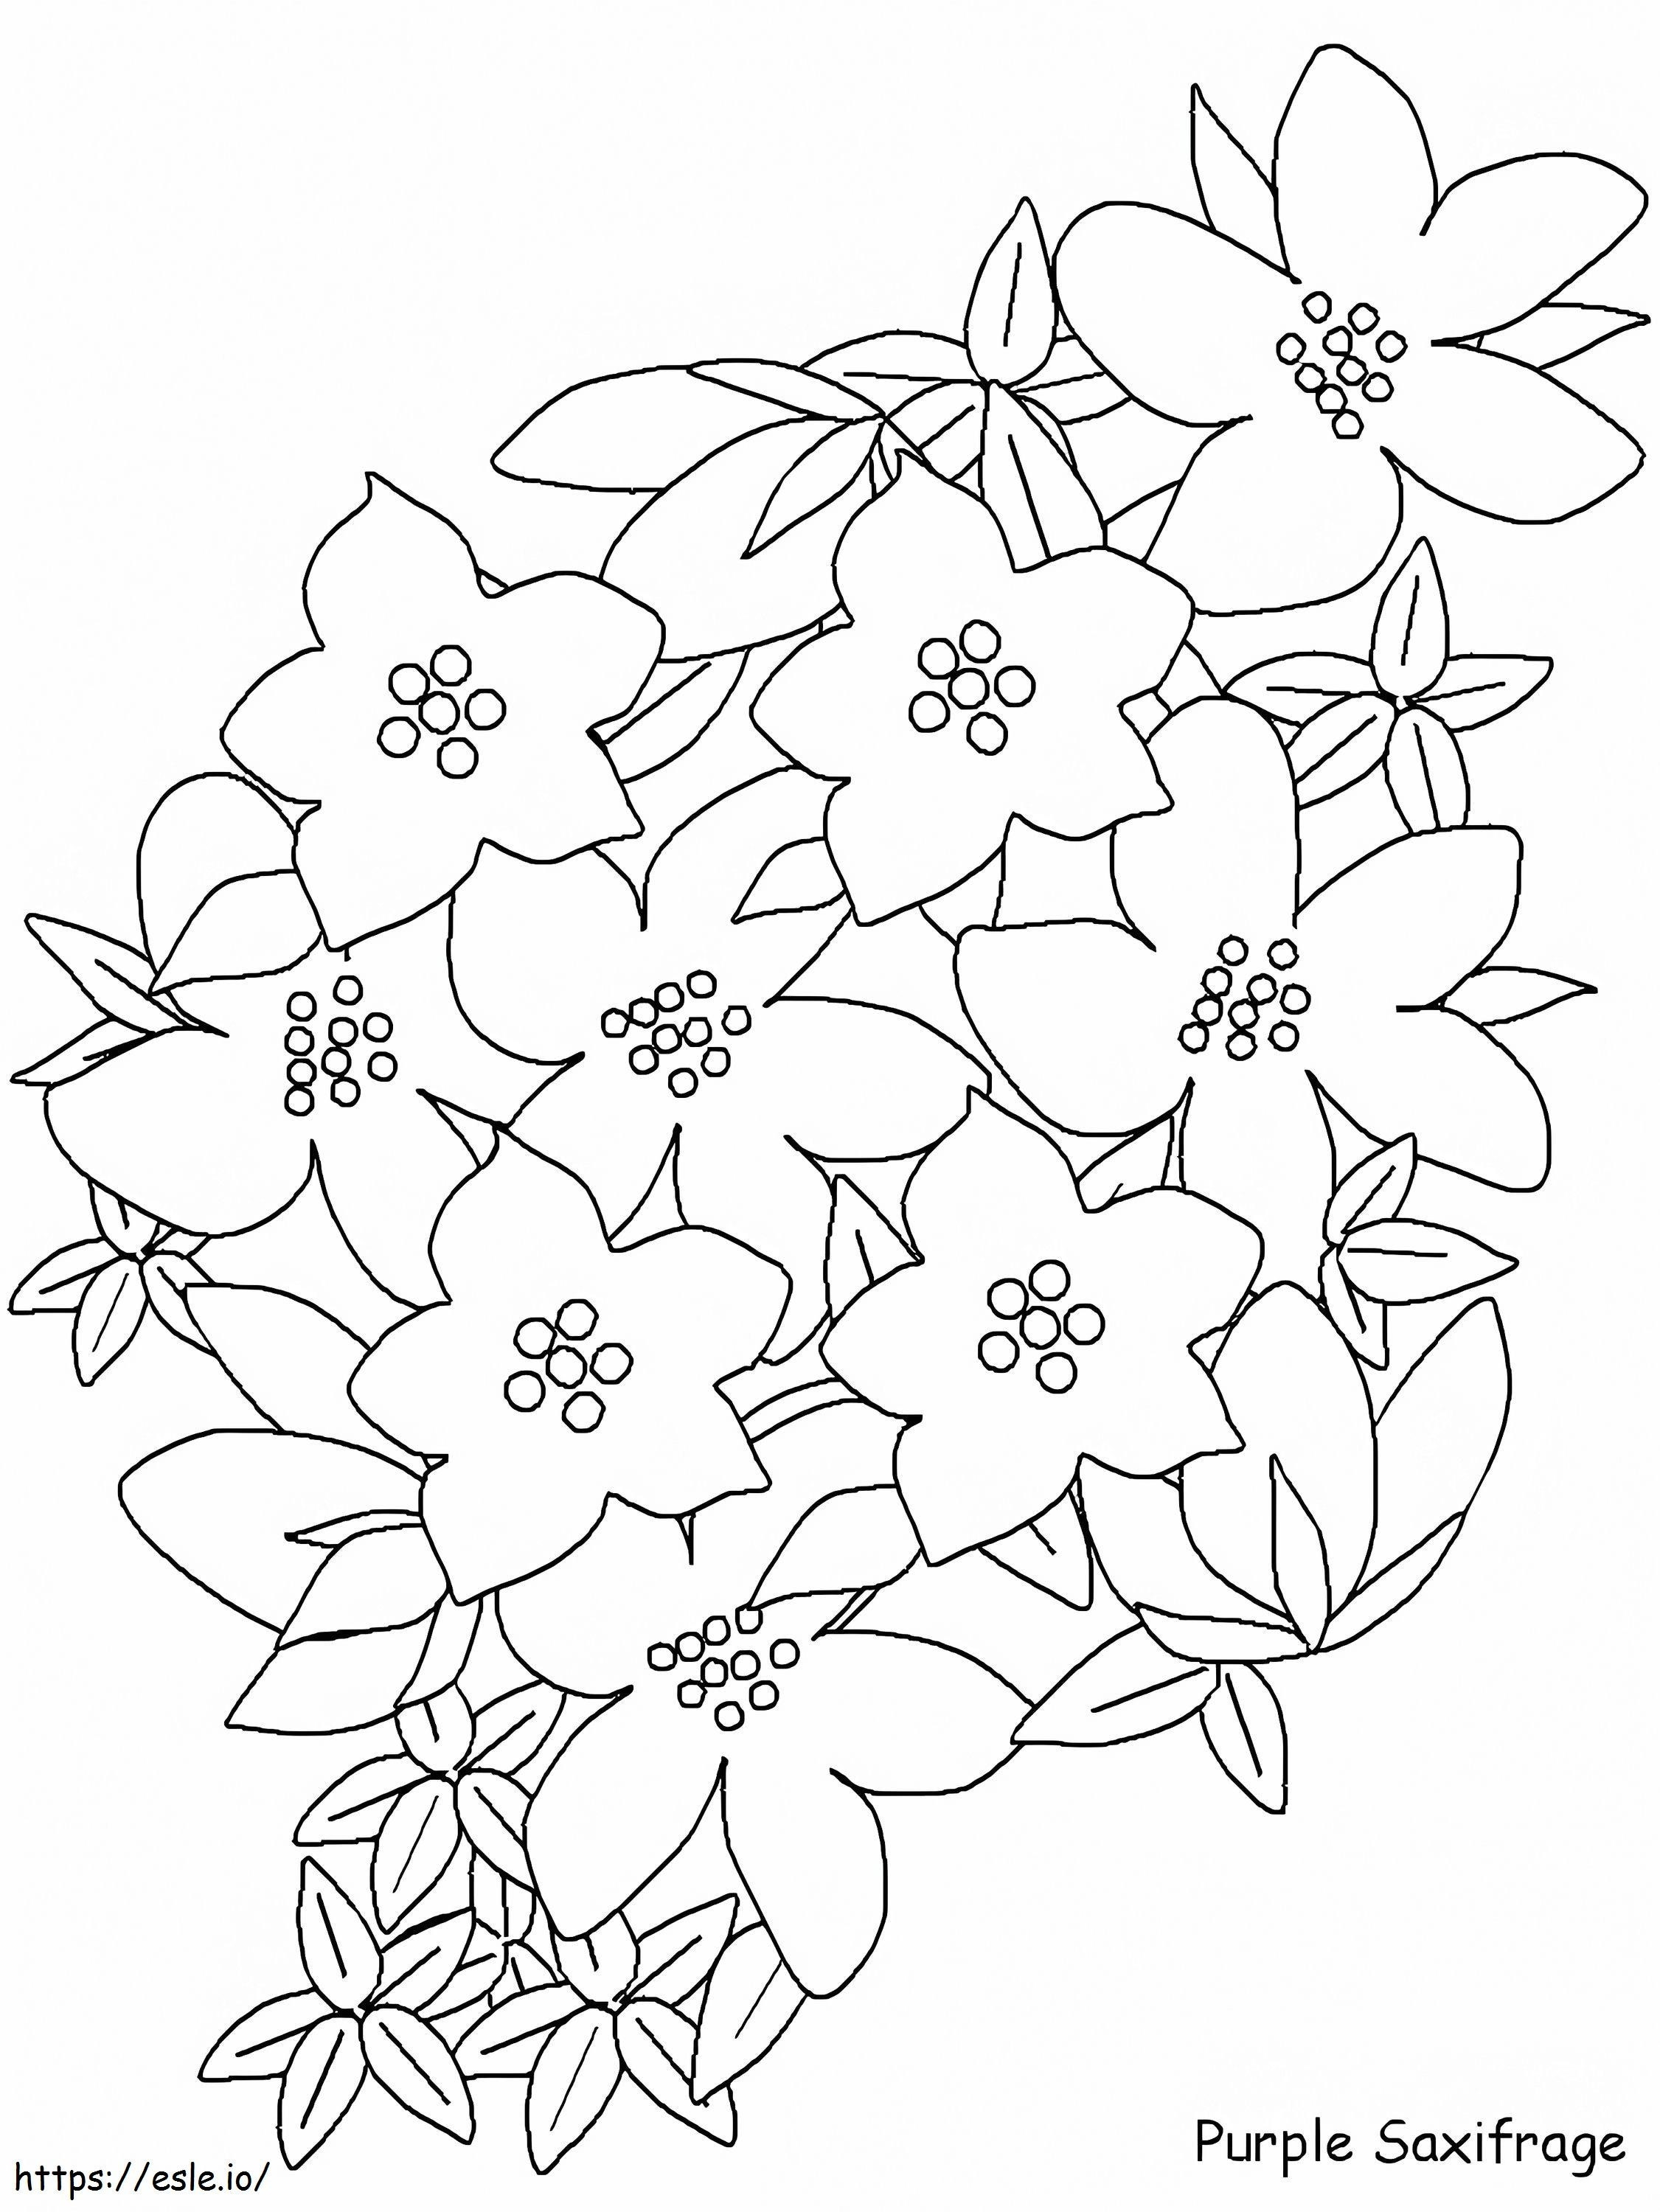 Purplesaxifragea4 coloring page